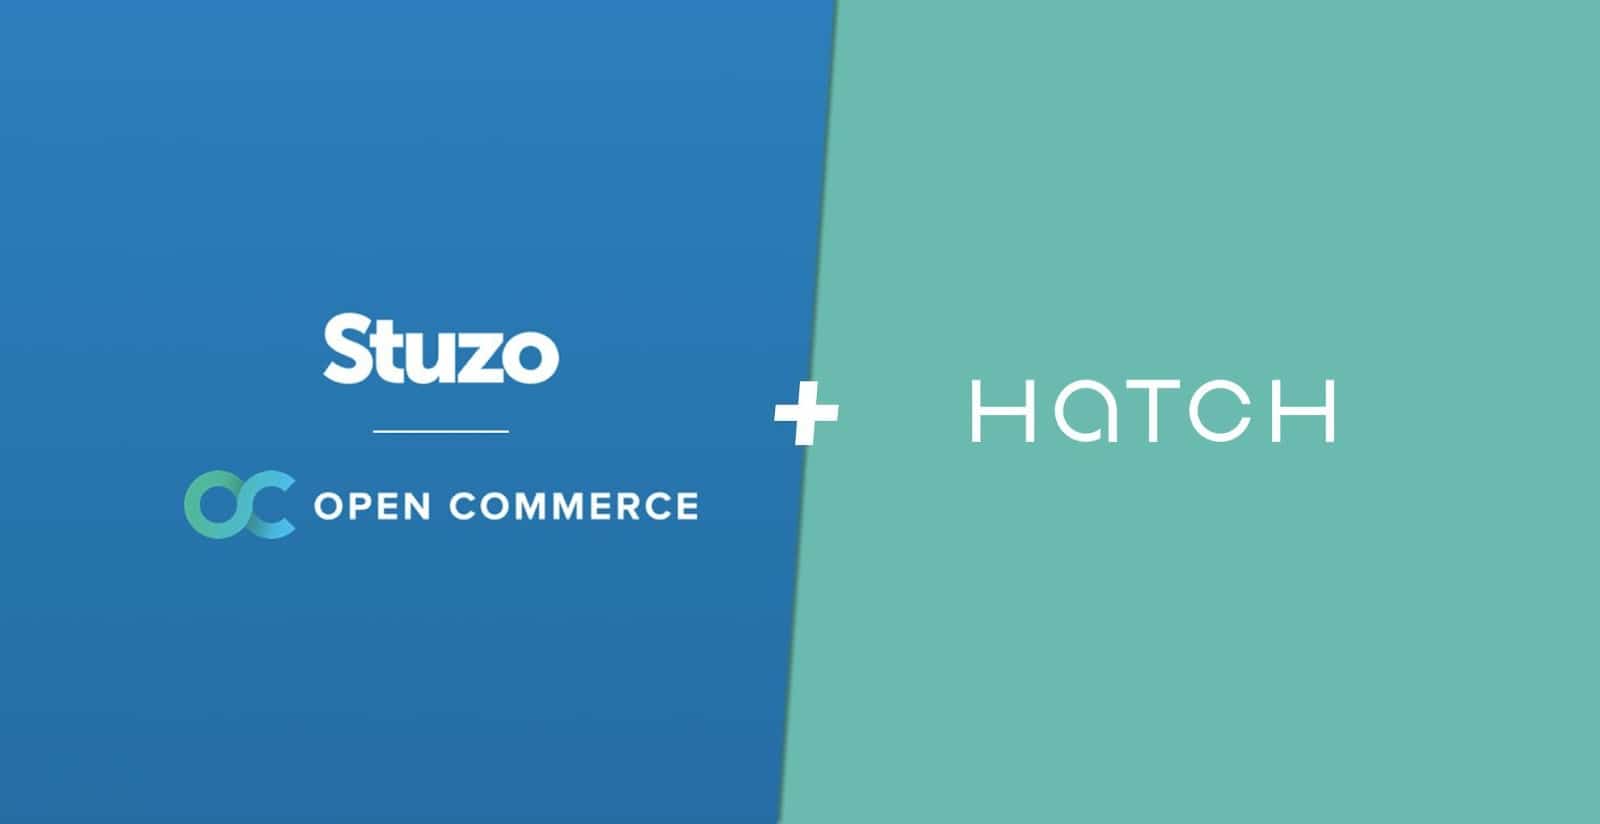 Hatch Stuzo Open Commerce